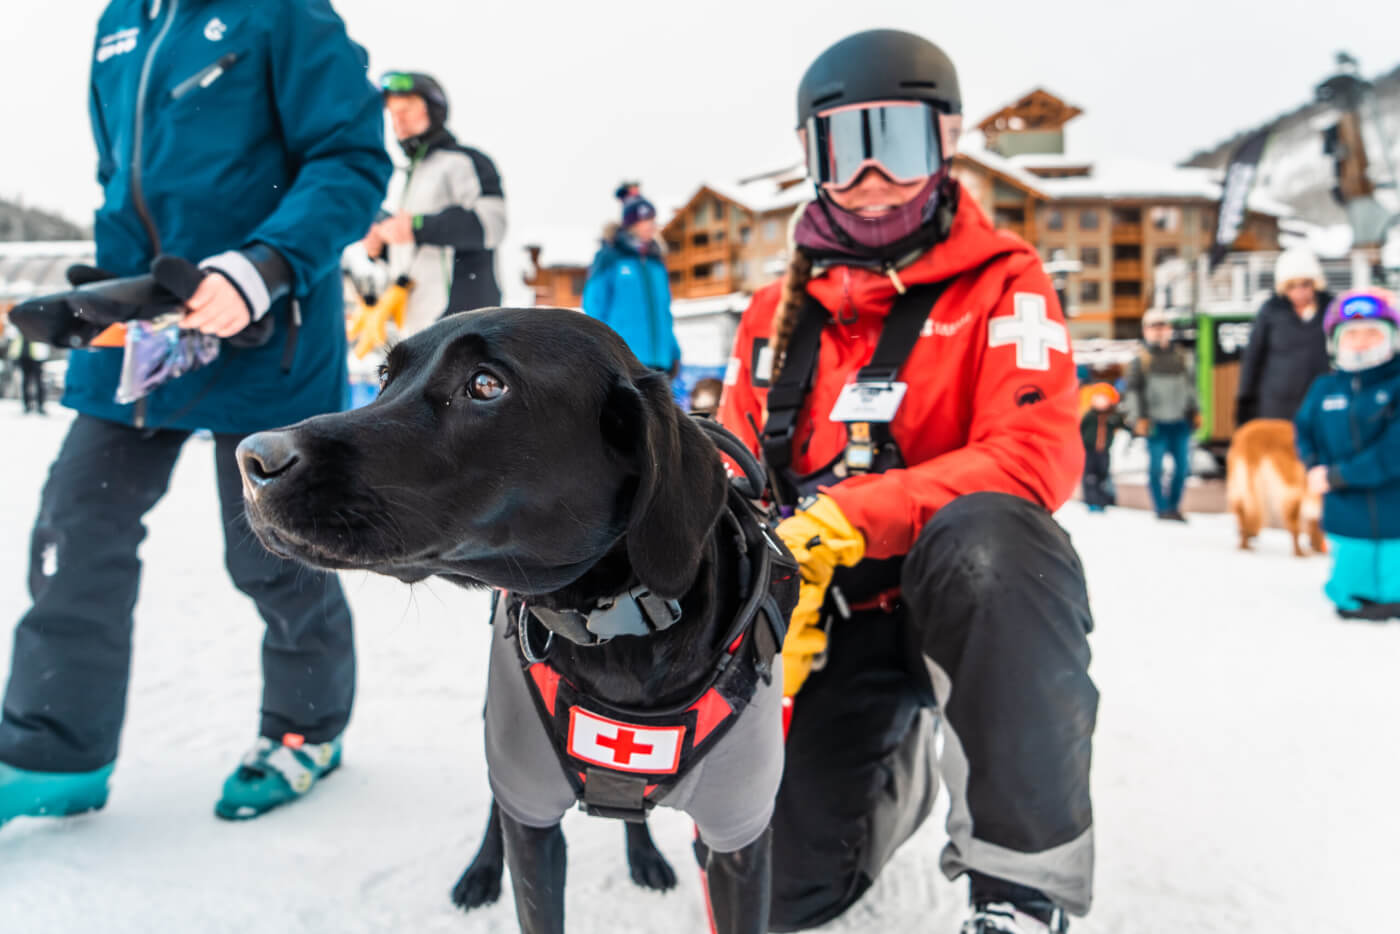 Ski patroller and avalanche dog preparing for work.